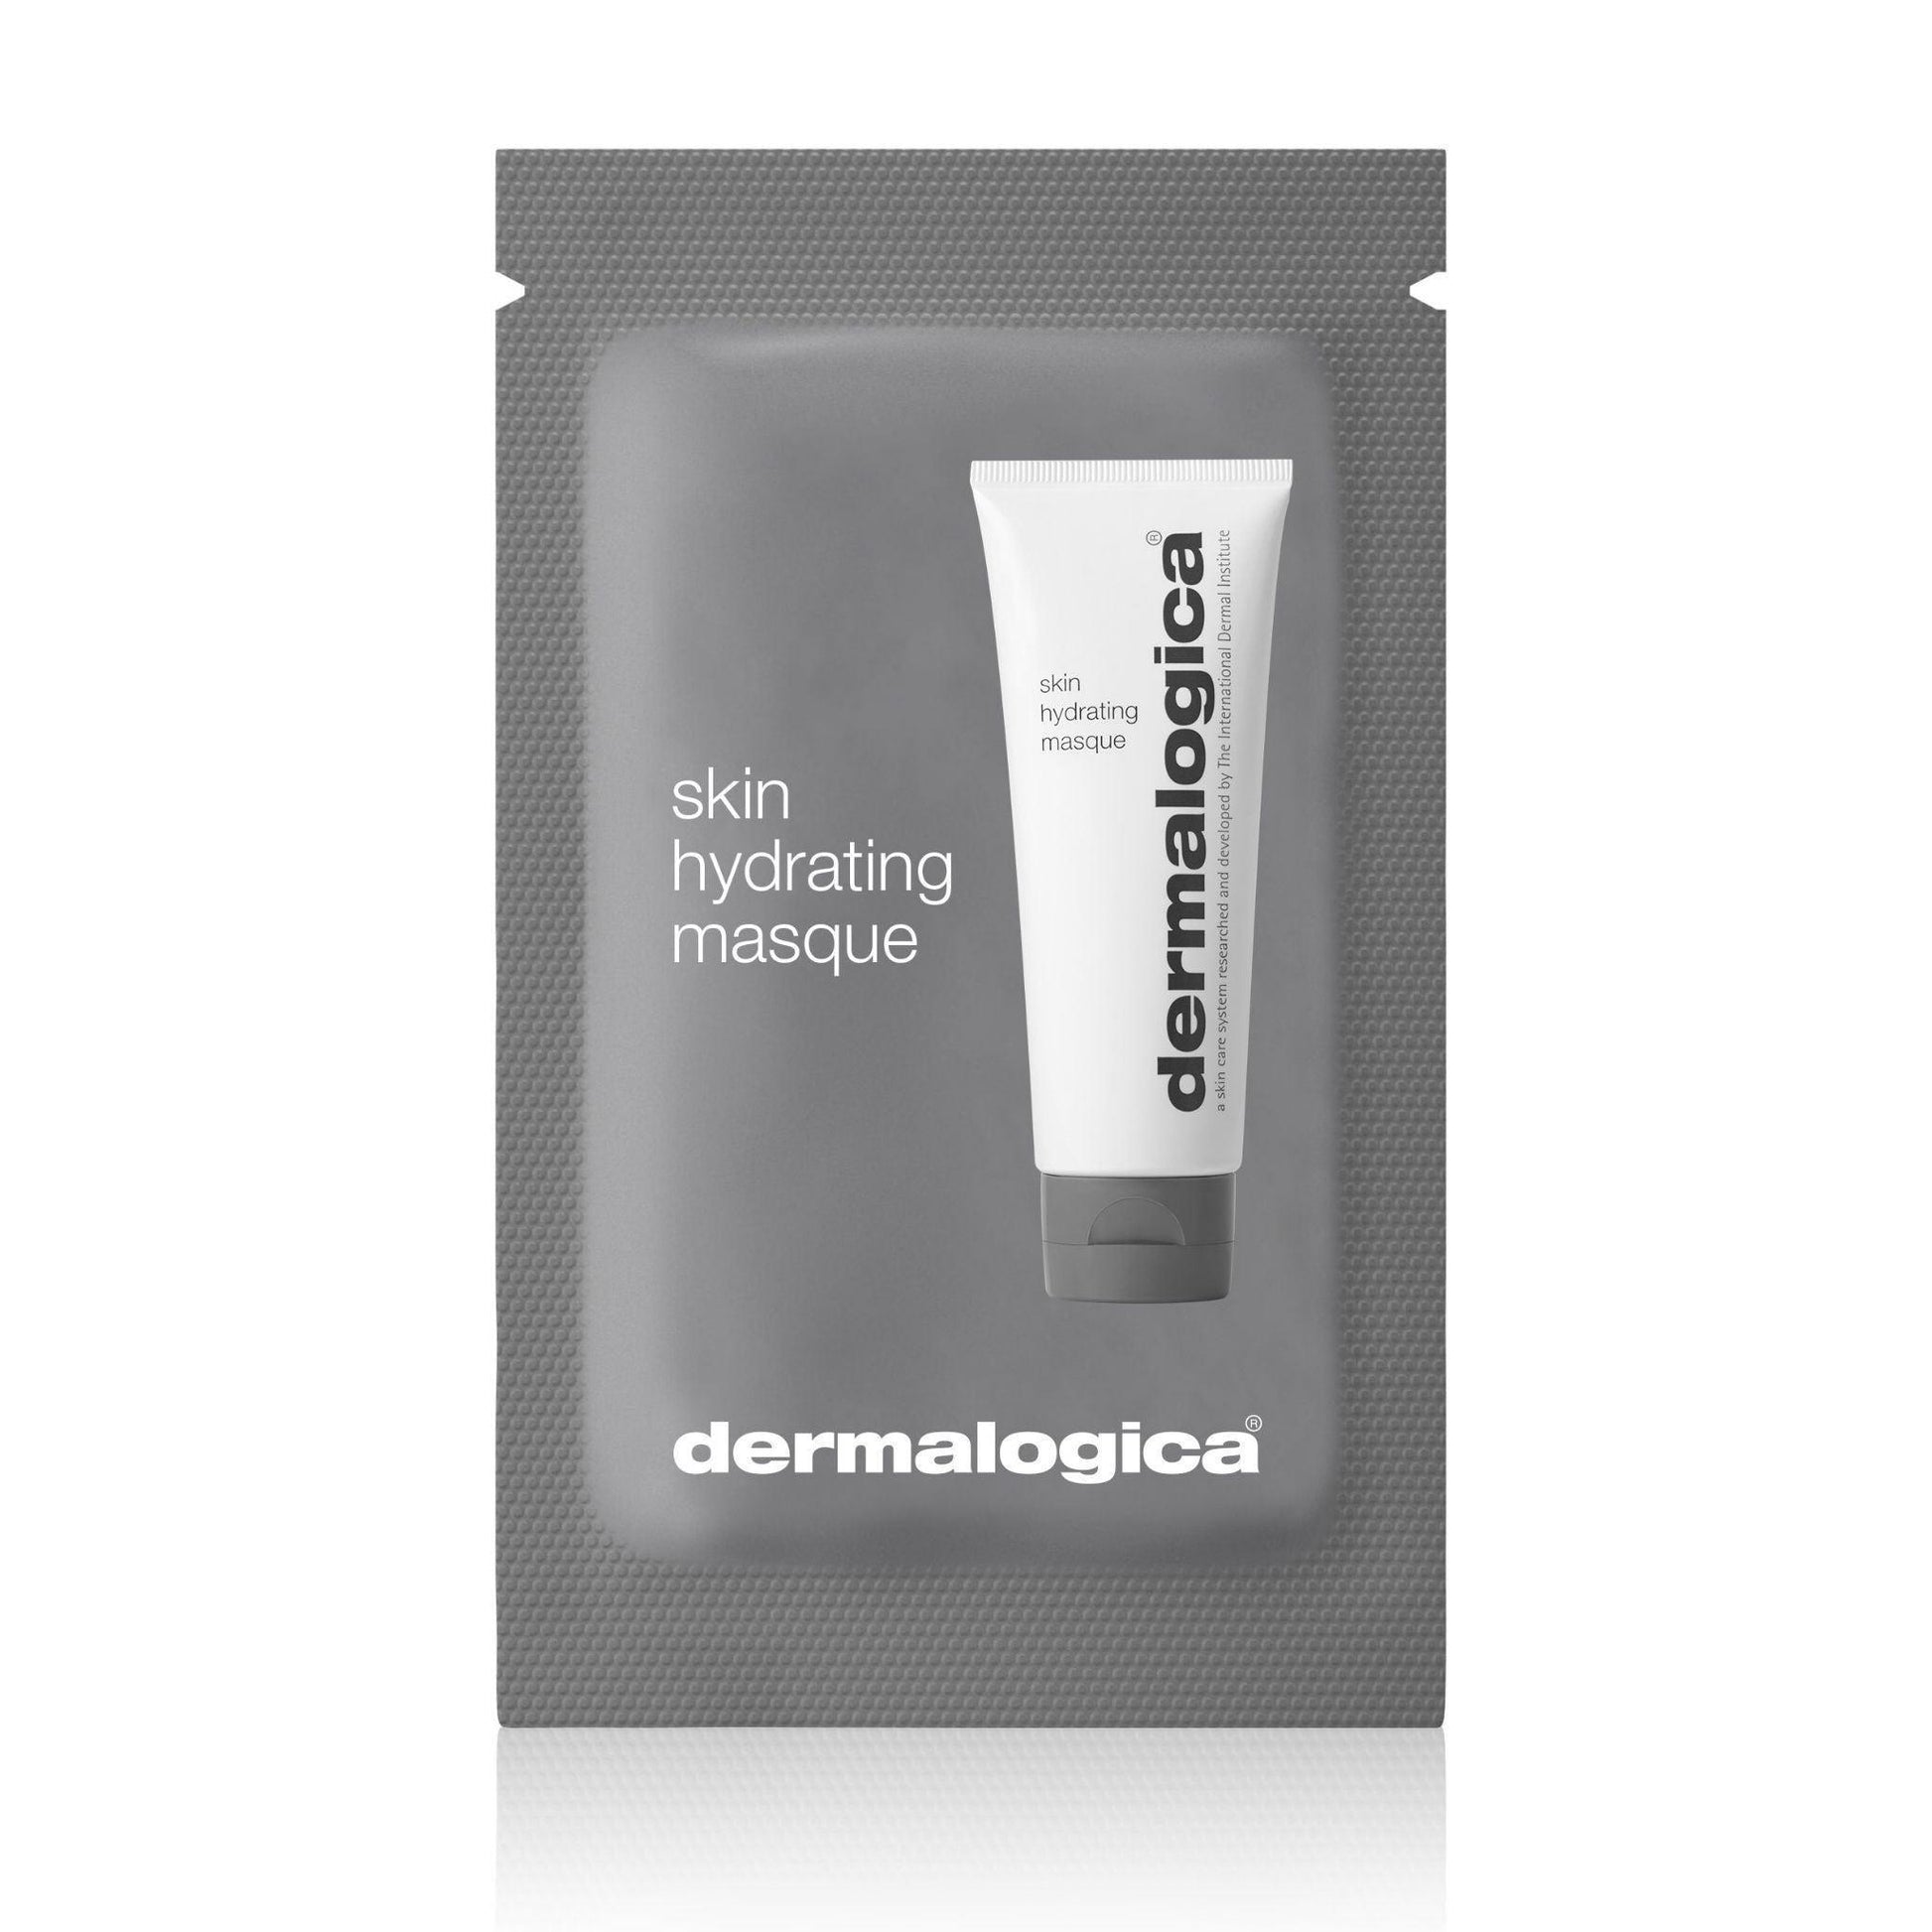 skin hydrating masque (sample) - Dermalogica Thailand